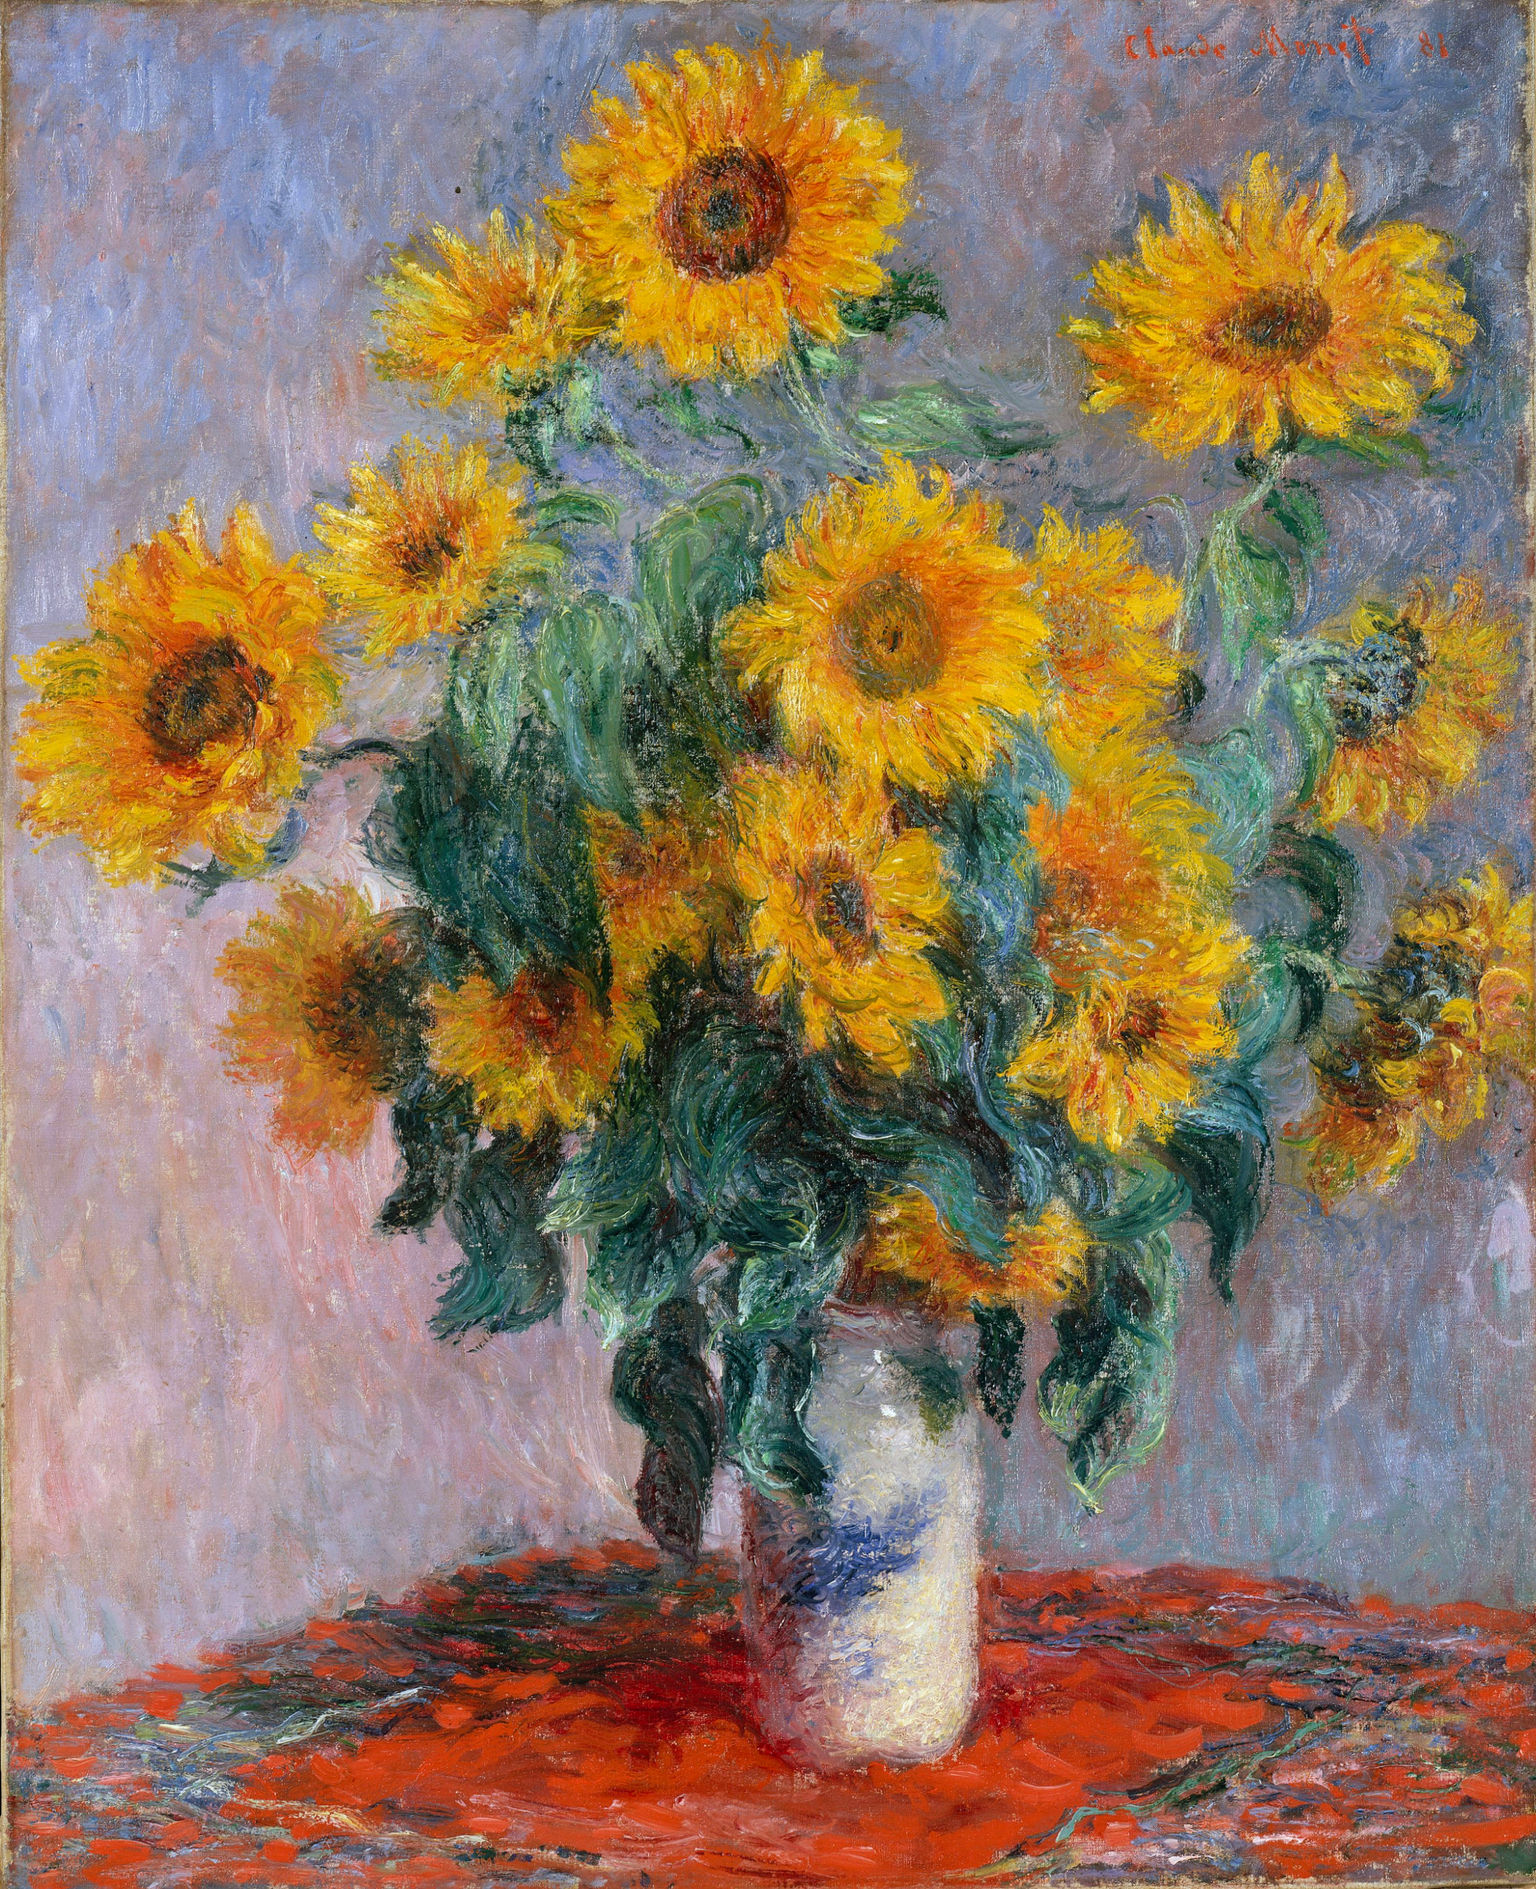 Bouquet of Sunflowers by Claude Monet